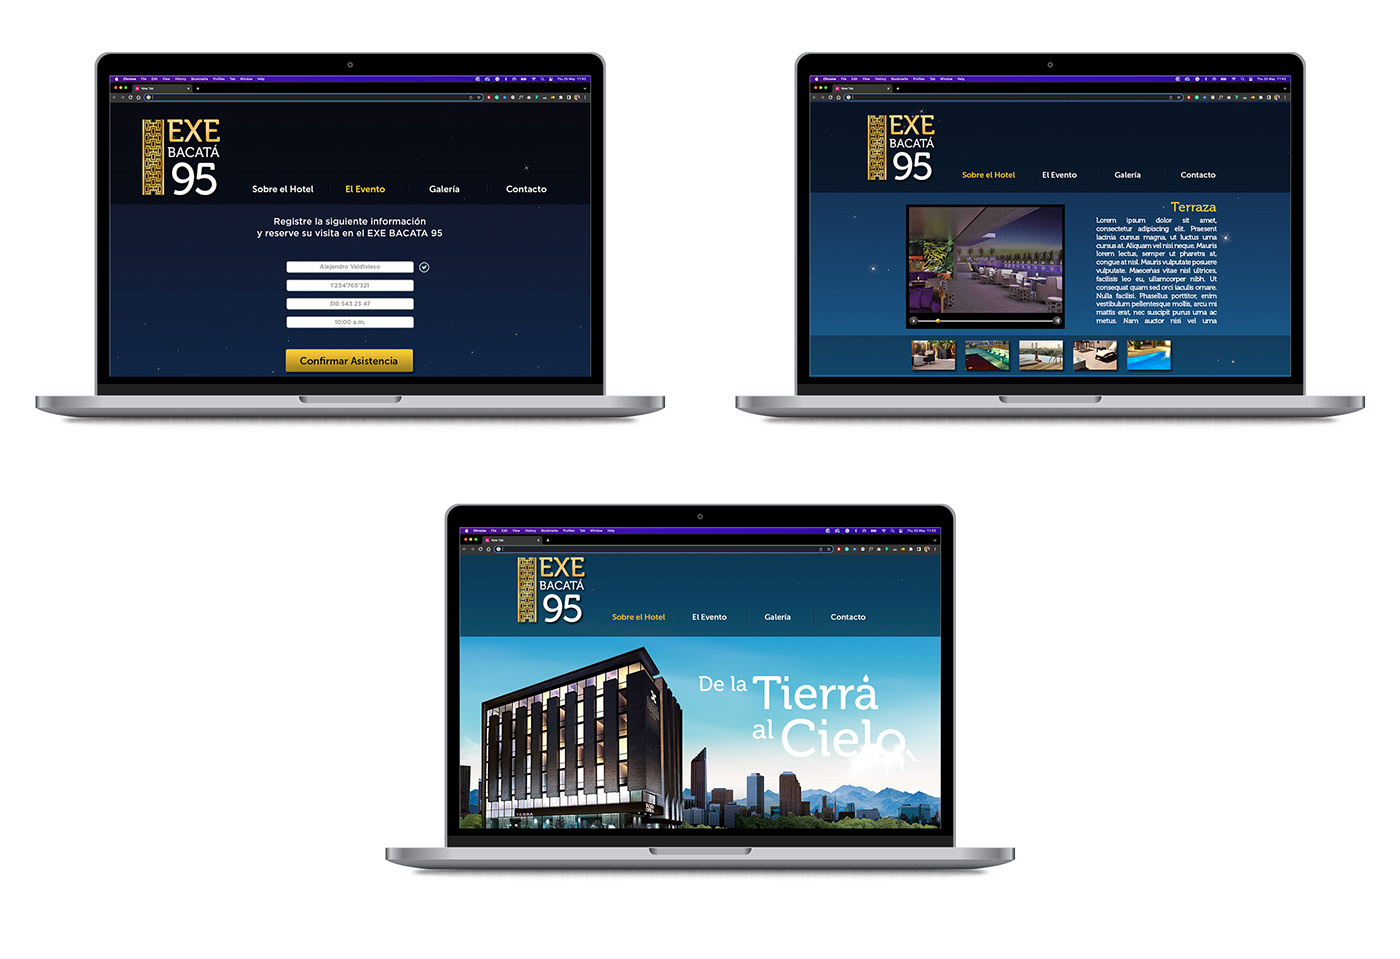 hotel app design app pop Web